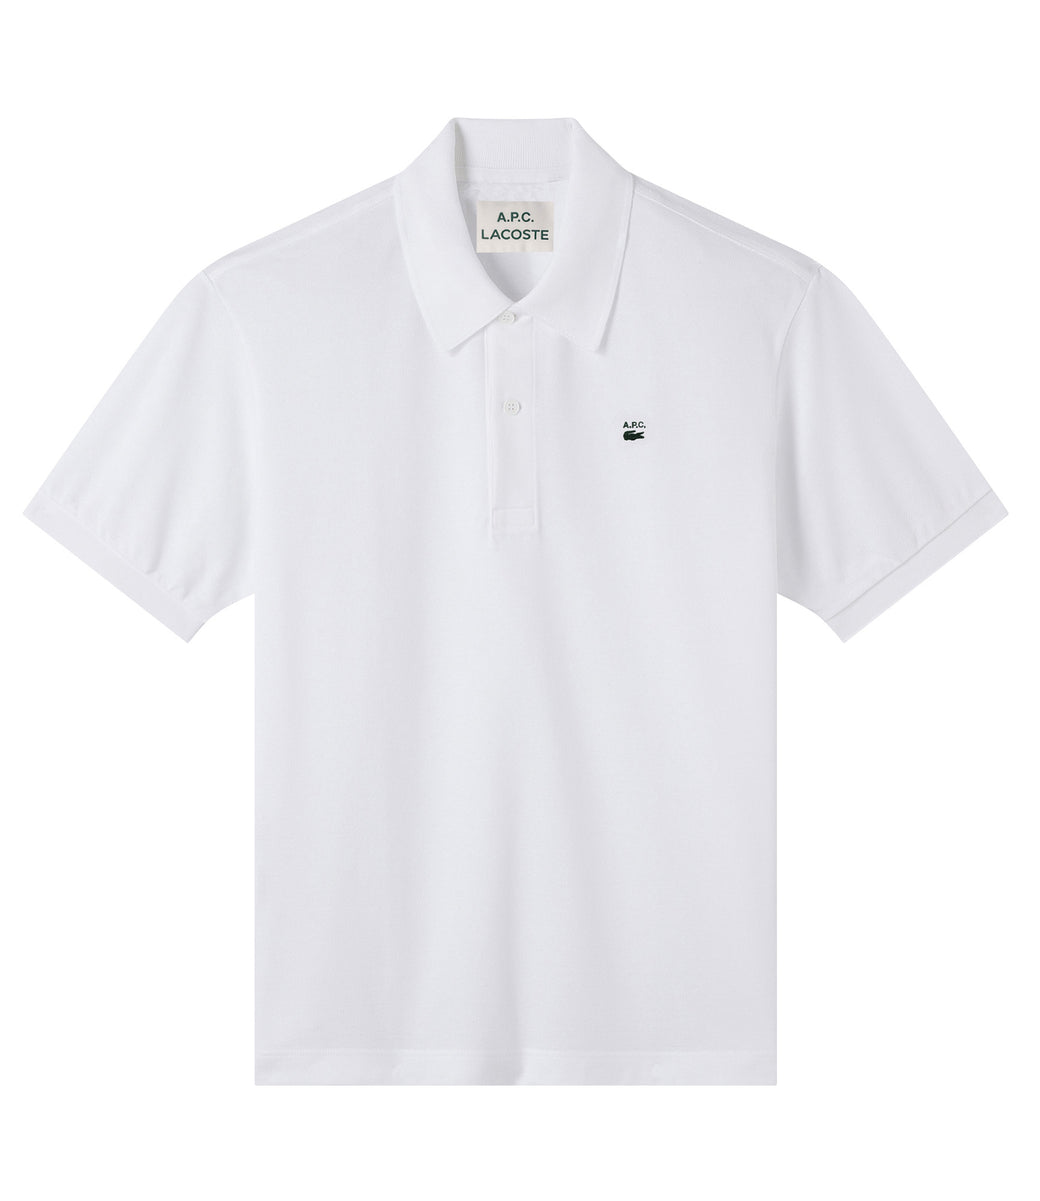 A.P.C. x Lacoste Polo Shirt White - SS22 - US